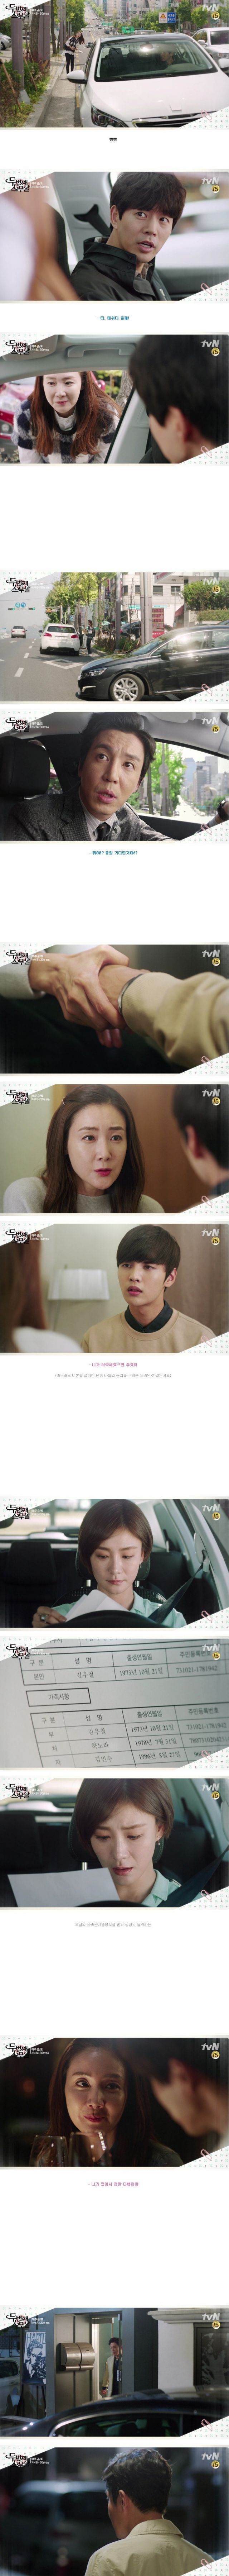 episodes 11 and 12 captures for the Korean drama 'Twenty Again'